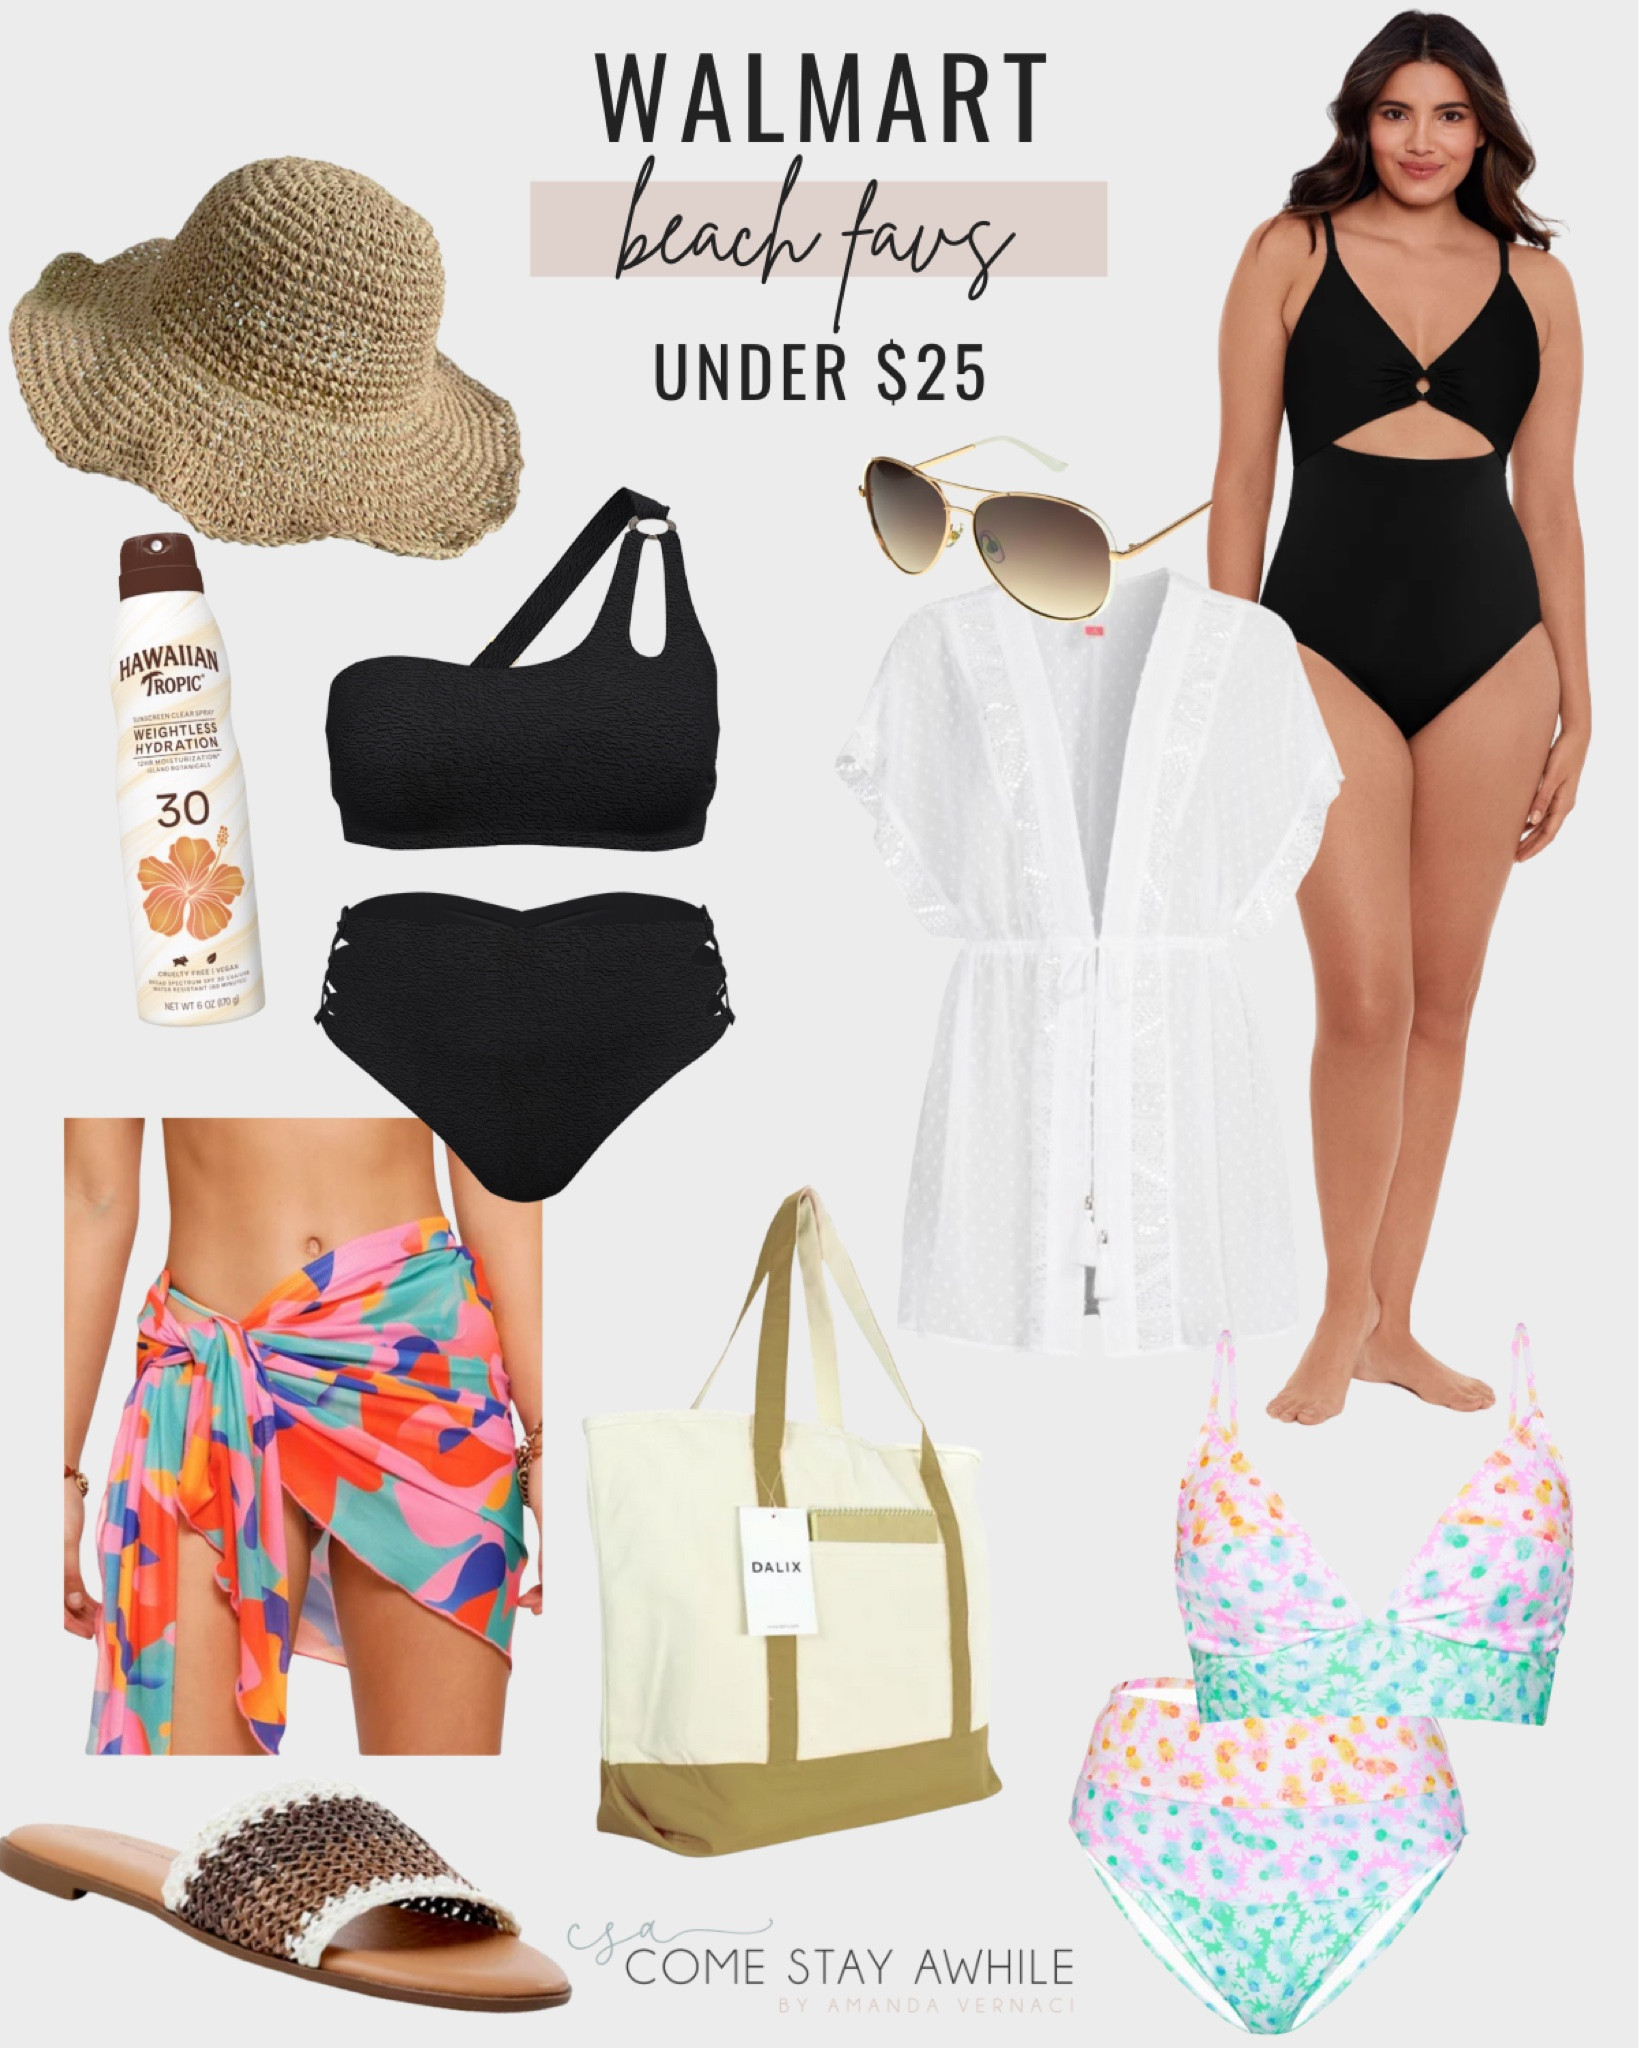 SUNSIOM Ladies Summer Sun Hats … curated on LTK